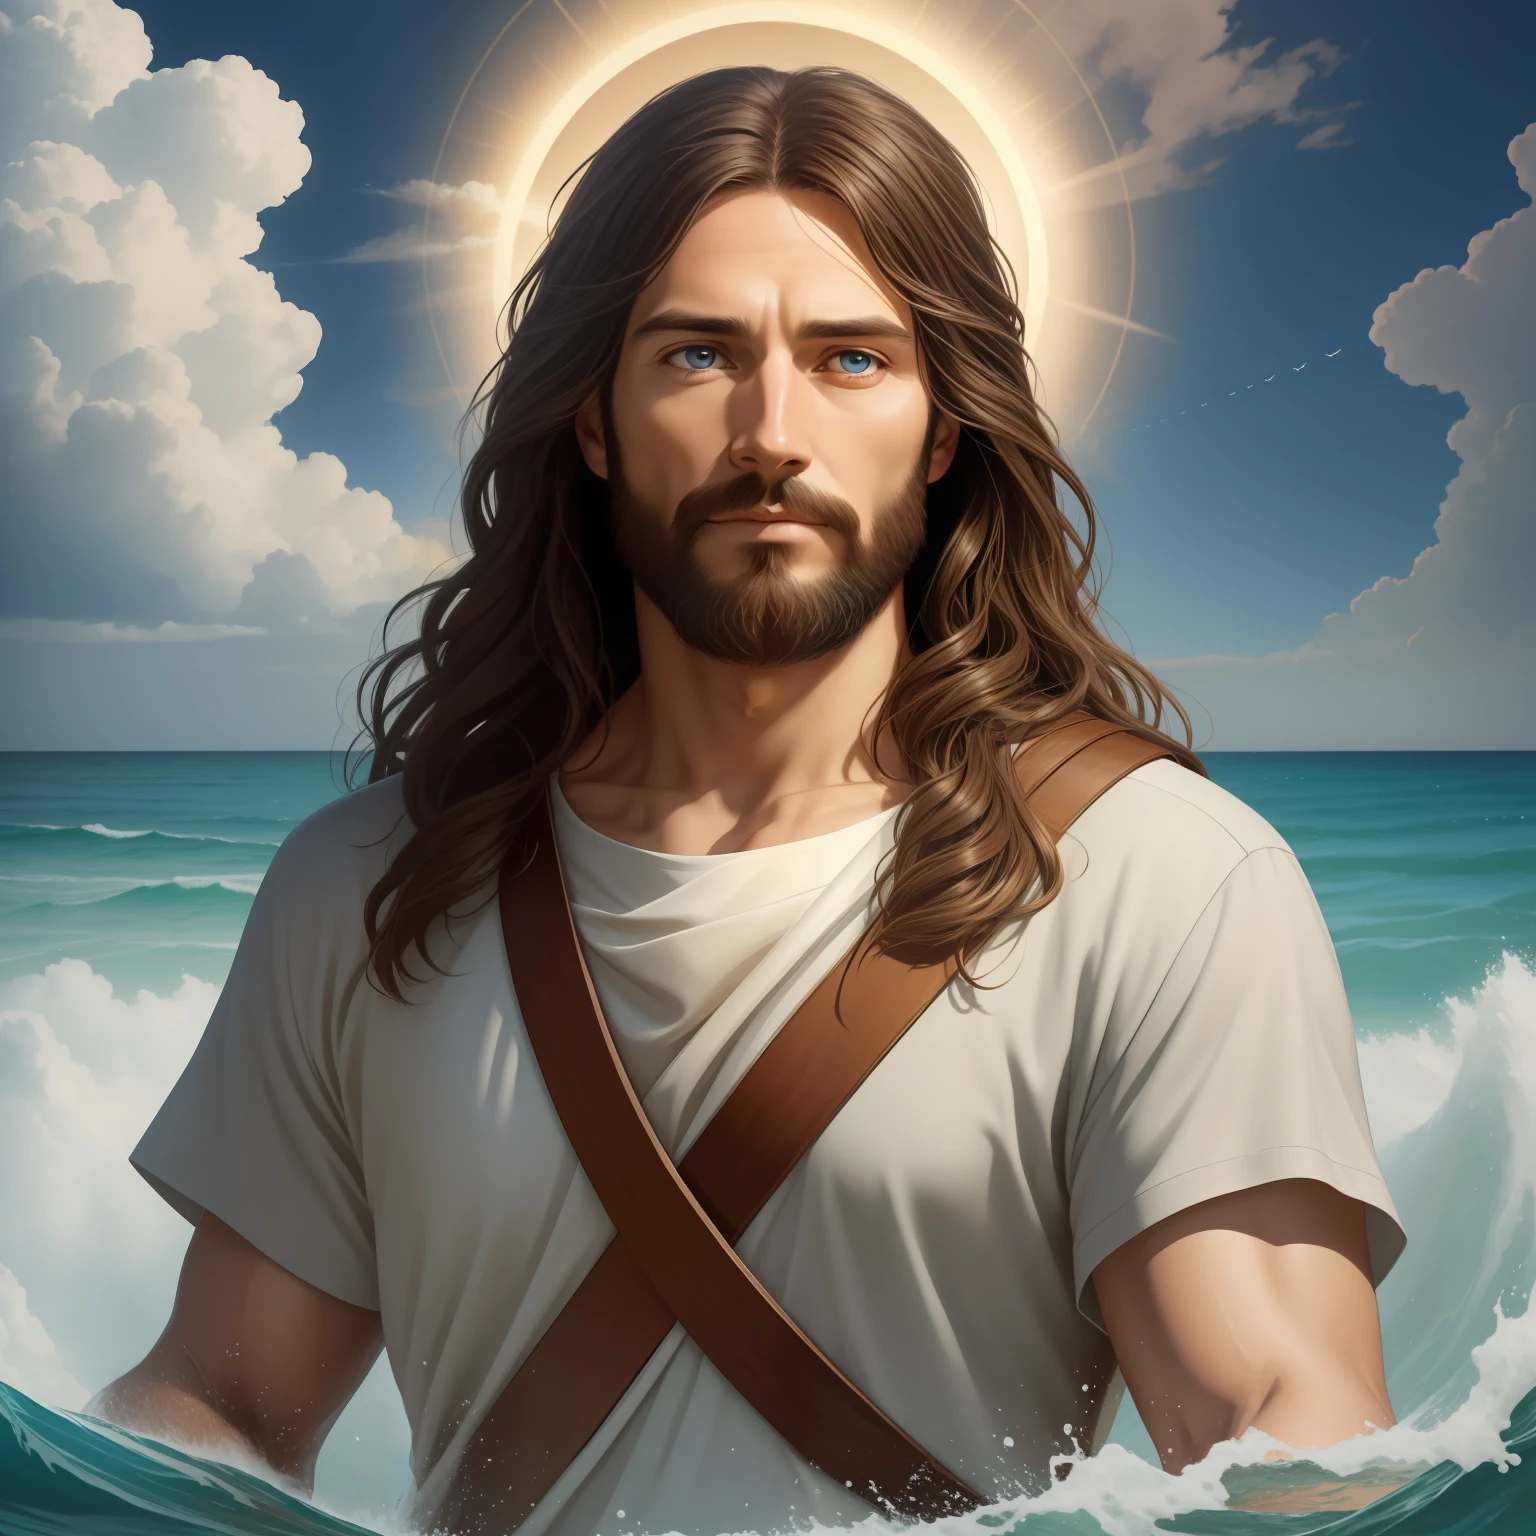 A beautiful ultra-thin 實際的 portrait of Jesus, 先知, 一名男子 35 歲 希伯來文 黑髮, 棕色短发, 完美的真正的蓝眼睛, 長長的棕色鬍子, 和, 幫助人們 , 穿著胸部封閉的長亞麻外衣, 在前視圖中, 全身, 聖經的, 實際的,迭戈·委拉斯開茲,彼得·保羅·魯本斯,林布蘭,亞歷克斯·羅斯,8K, 概念藝術, Photo實際的, 實際的,  插圖, 油畫, 超現實主義, Hyper實際的, 幫助人們 , 數位藝術, 風格, watercolorReal Jesus flying on sky 和 a flying cloud in the background, 耶穌在水上行走, 聖經的 illustration, epic 聖經的 representation, 迫使他逃離, 從海洋出來, ! 握在手上!, 下船, 海洋之神, 美麗的表現, 8K 3D Model, 實際的,
a 3D 實際的 of 耶穌 和 a halo in the sky, 耶穌 christ, 在天堂微笑, portrait of 耶穌 christ, 耶穌 face, 第35章 少年全能神, 天上神的肖像, 格雷格·奧爾森, gigachad 耶穌, 耶穌 of nazareth, 耶穌, 神的臉, 上帝看著我, 他正在熱情地跟你打招呼, 他很高興, 头像图片